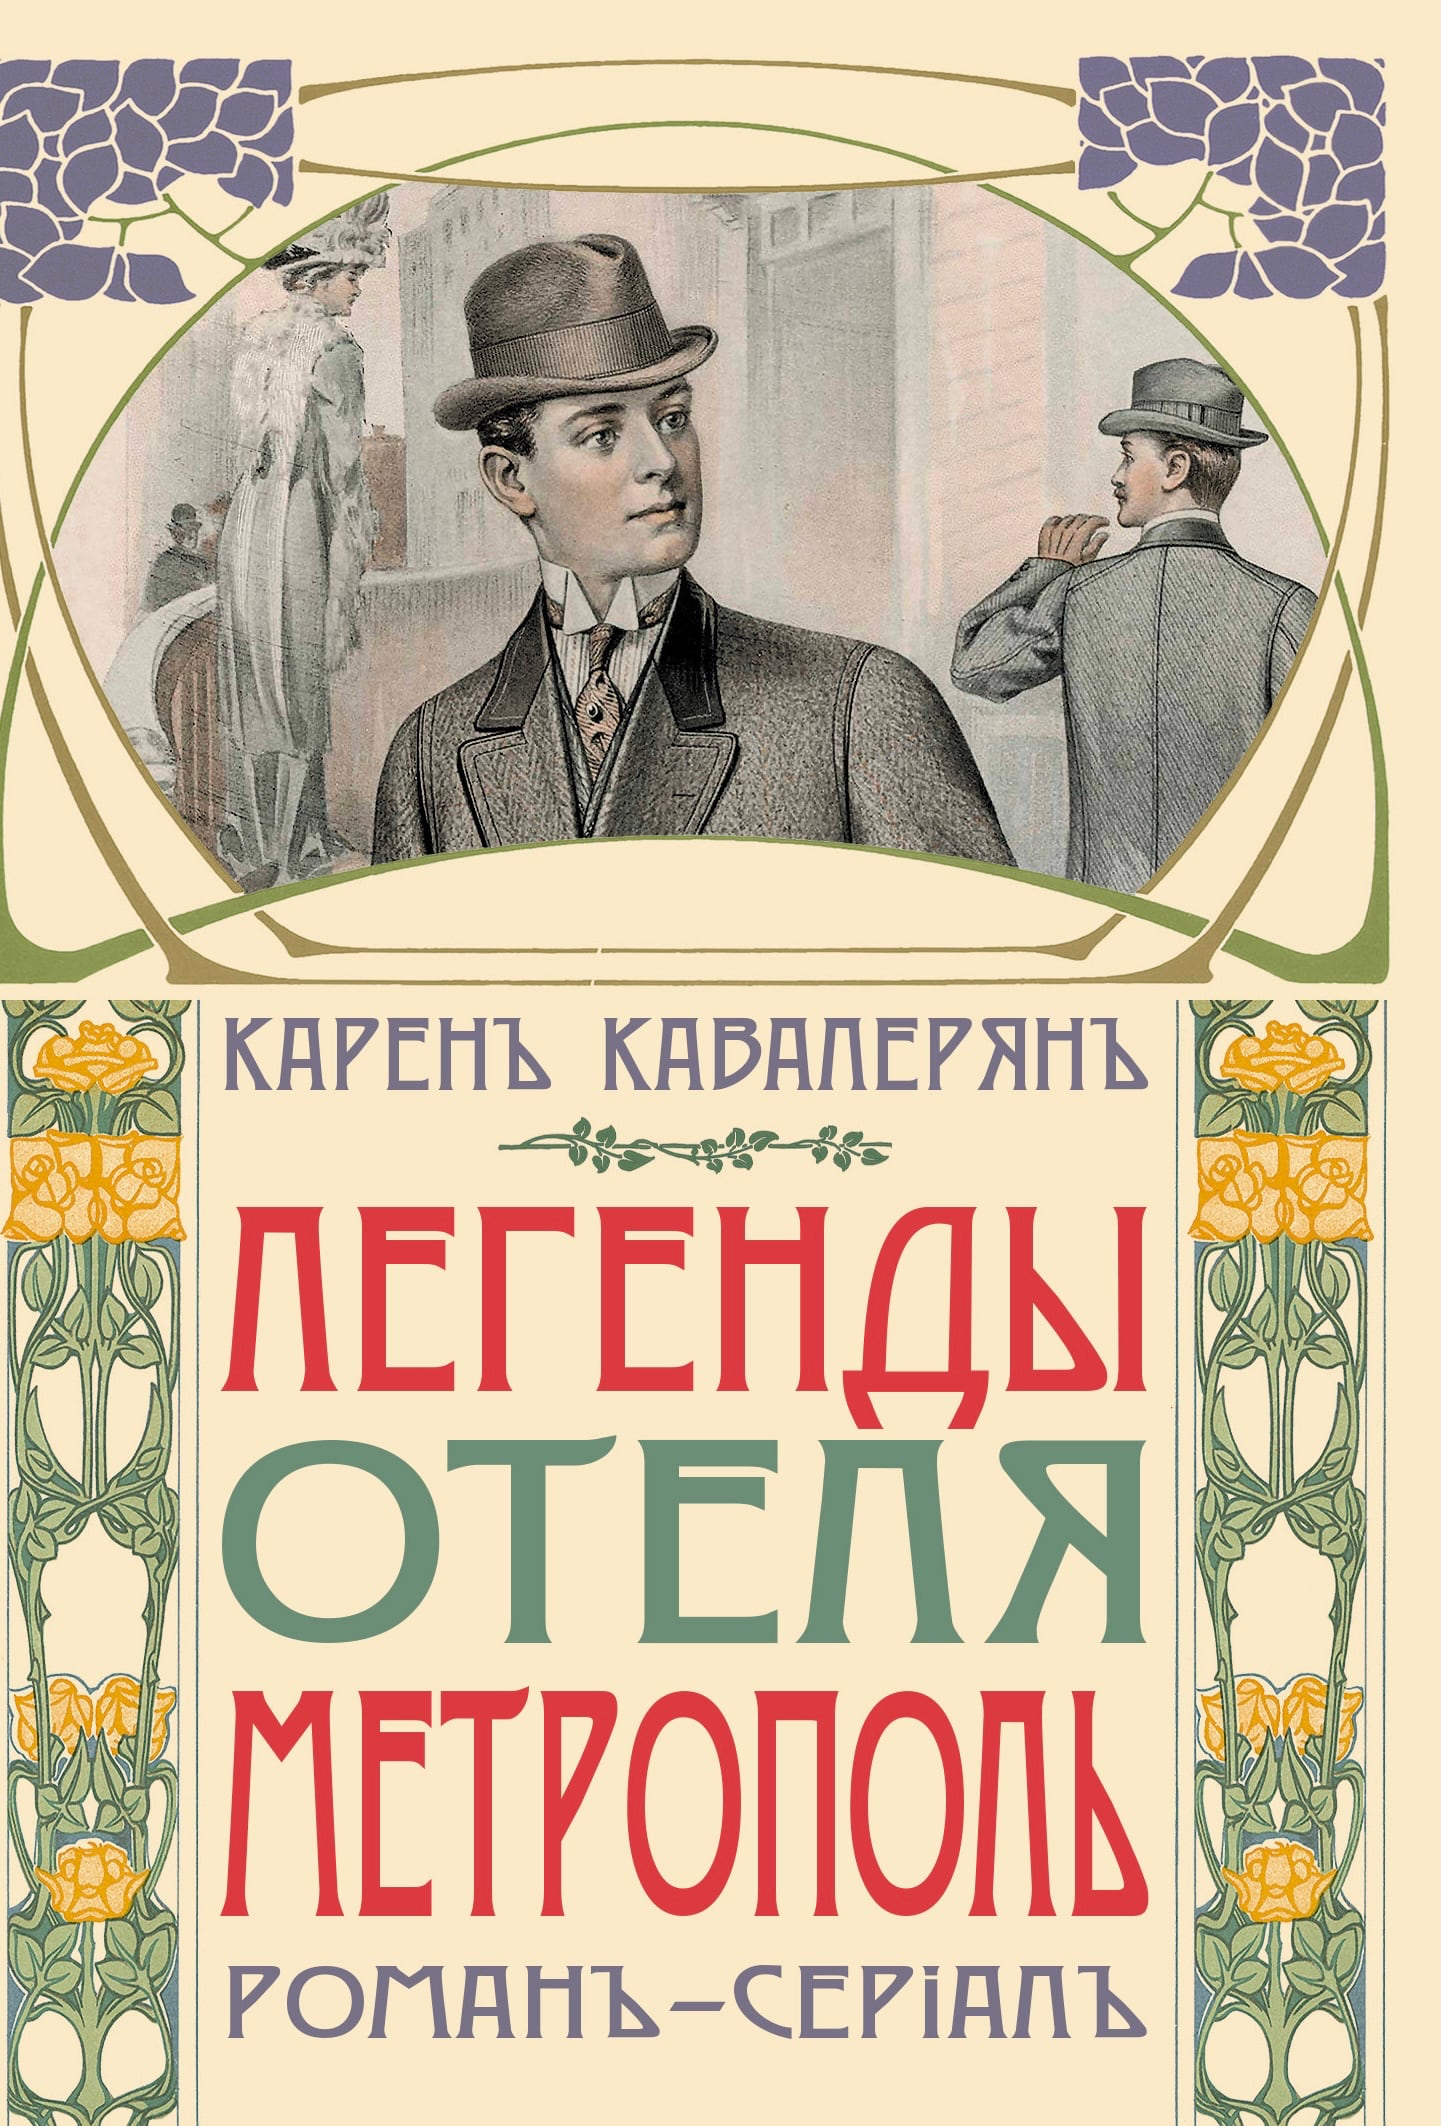 metropol book